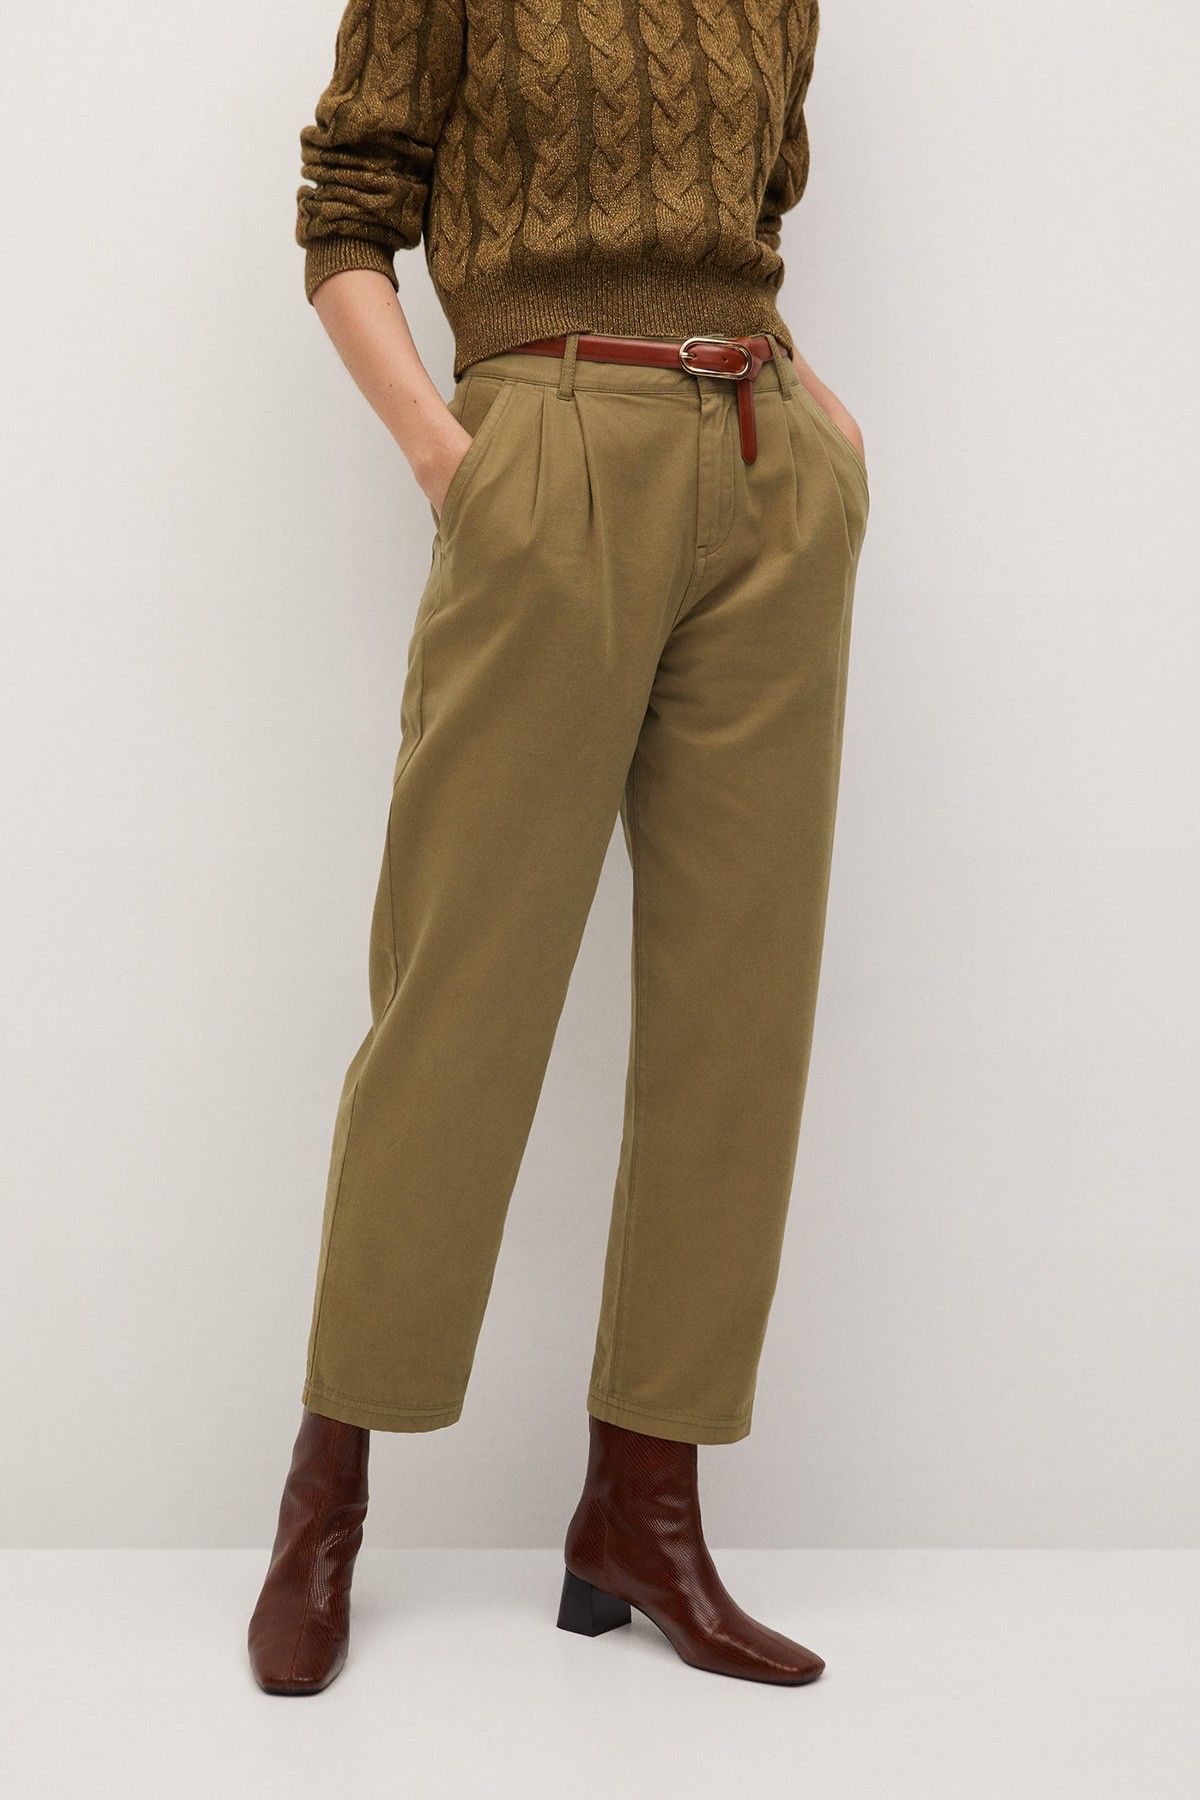 Men's Tan All-Cotton Pleated Pant – UniformsInStock.com